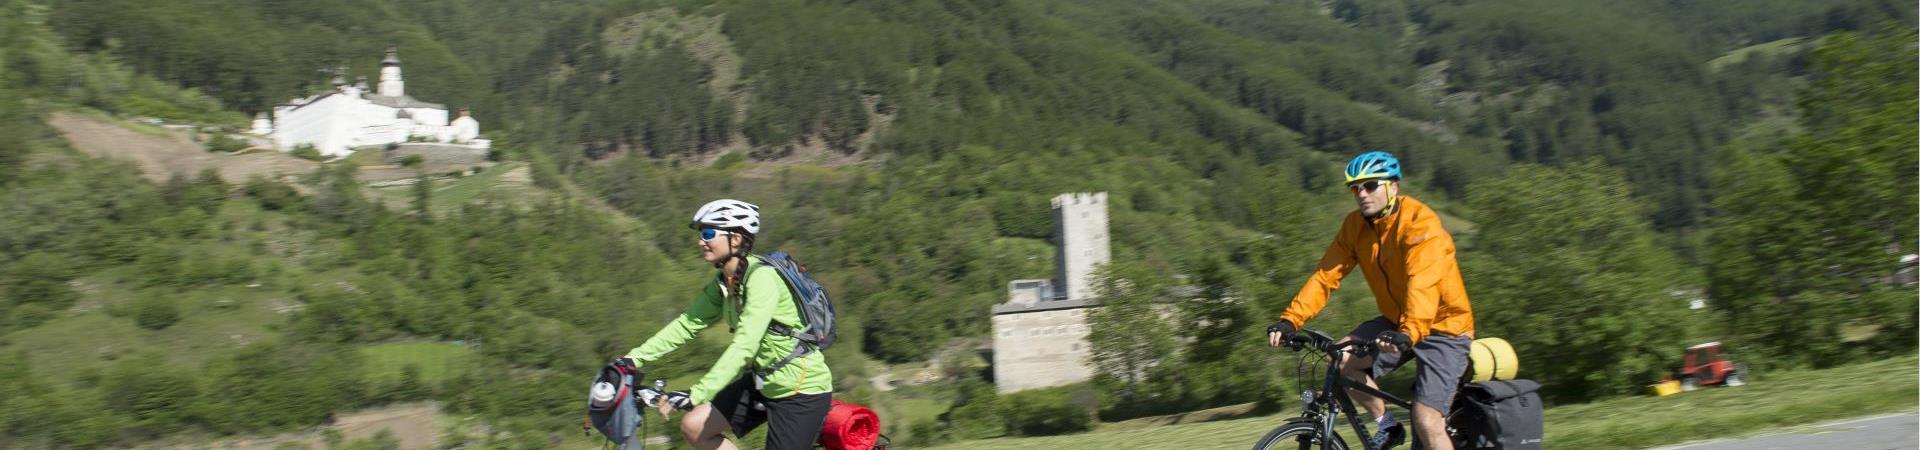 Biking in the Venosta Valley